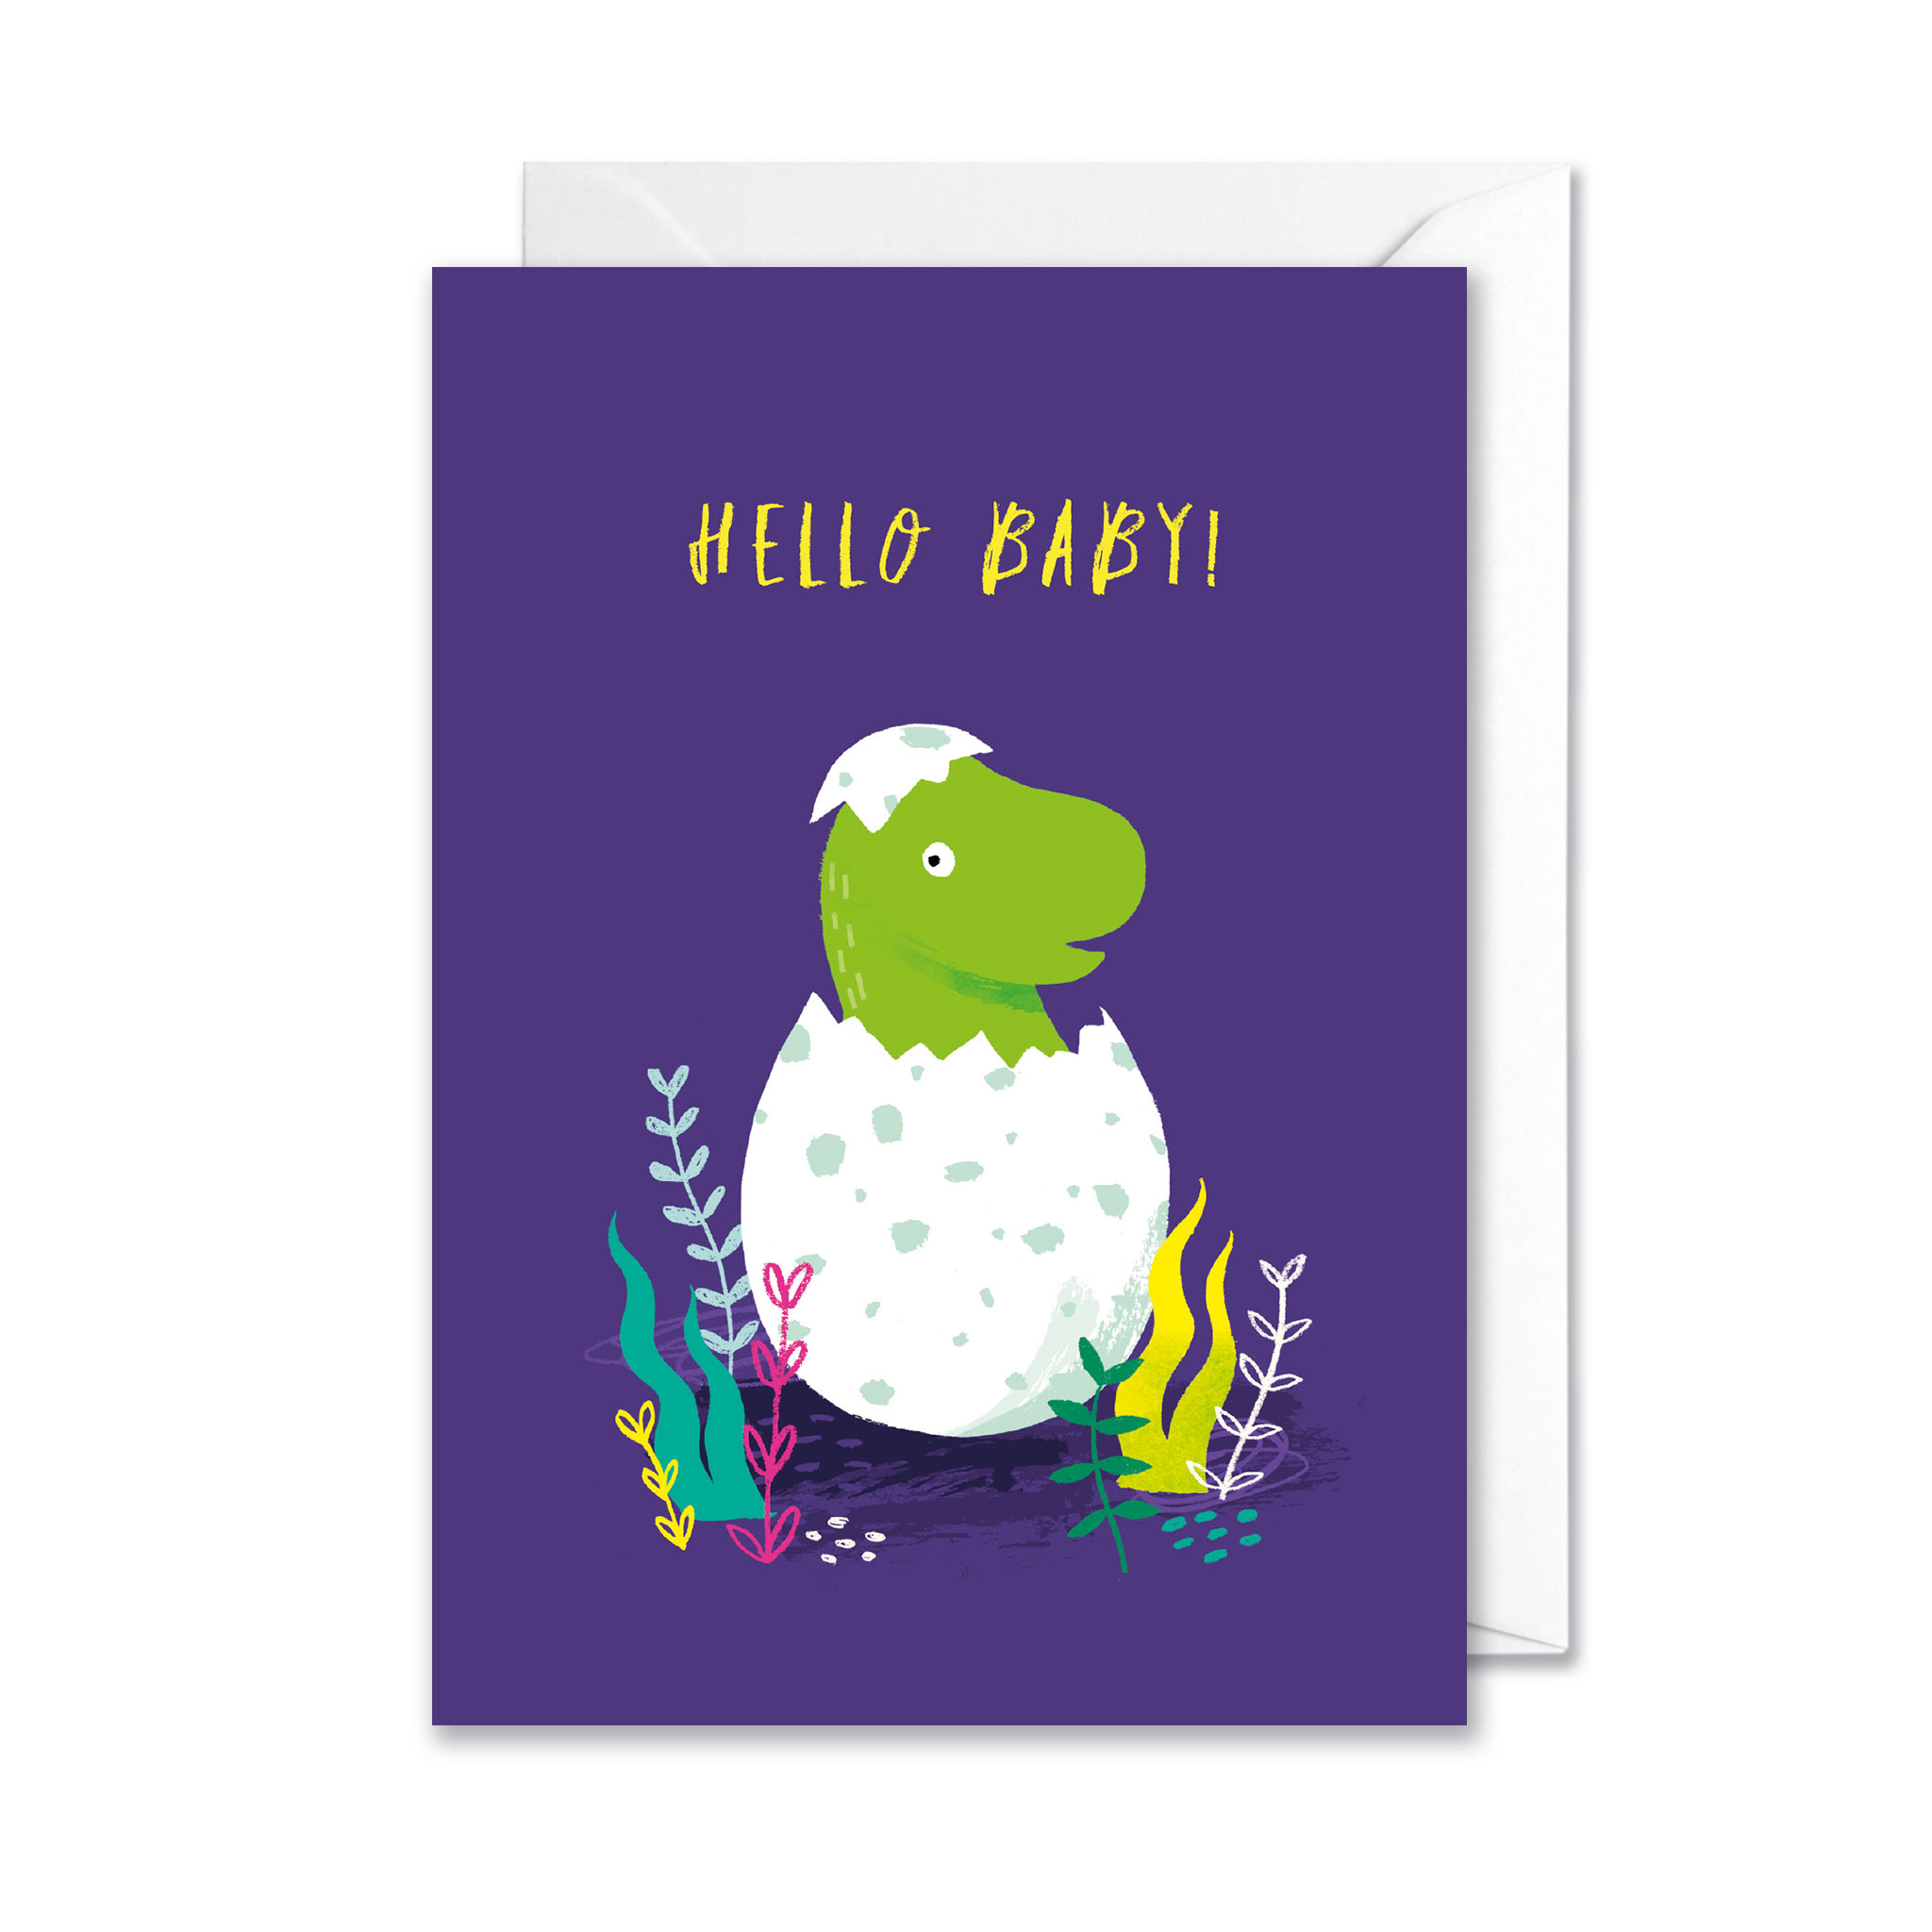 New baby dinosaur greetings card design